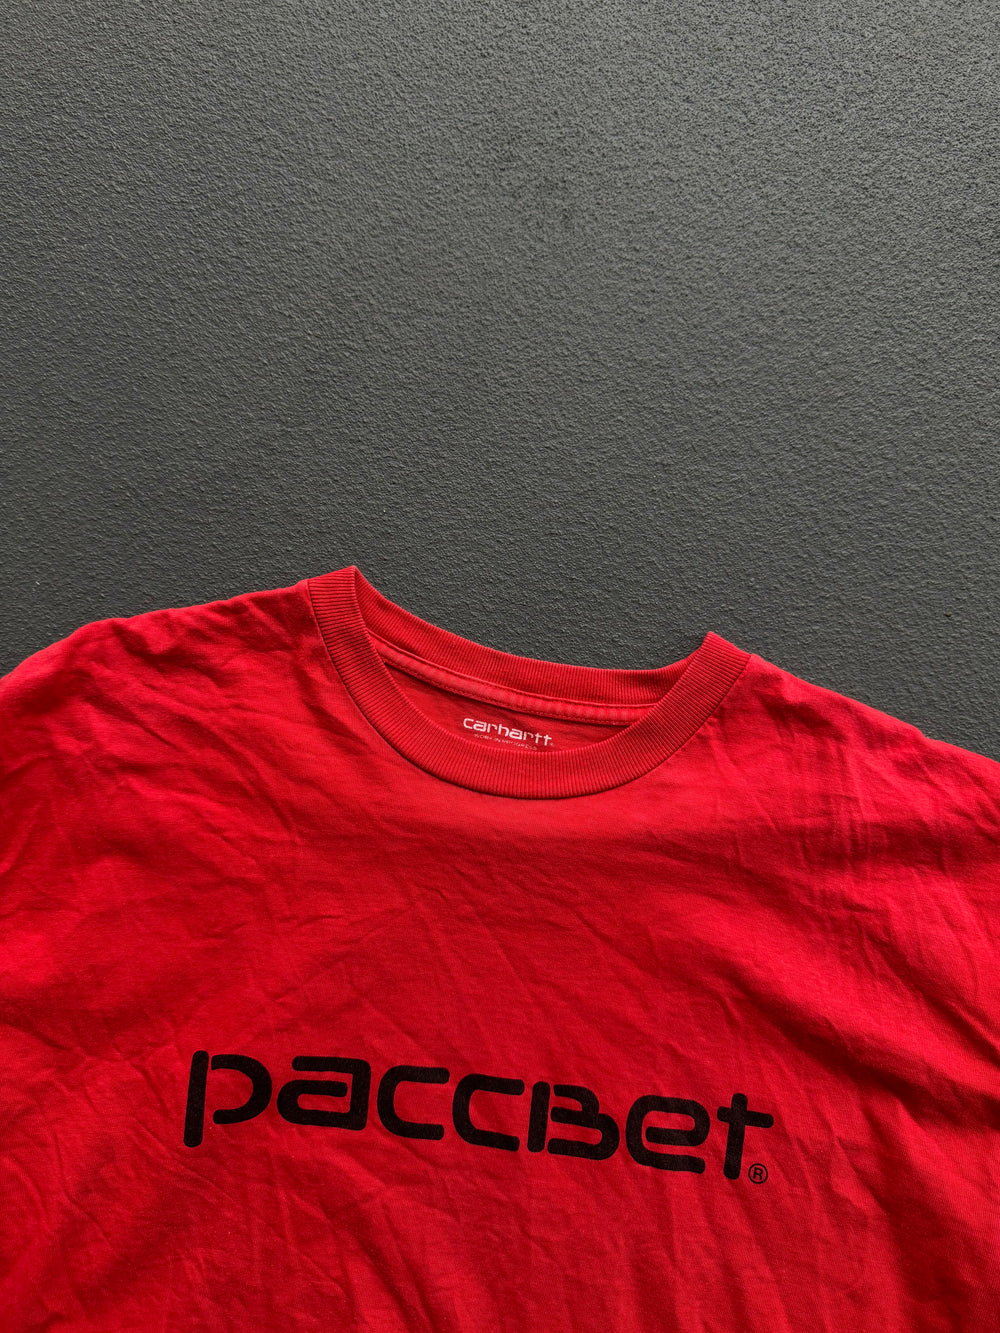 Carhartt Gosha Rubchinsky Paccbet Rassvet Logo T-Shirt (M)